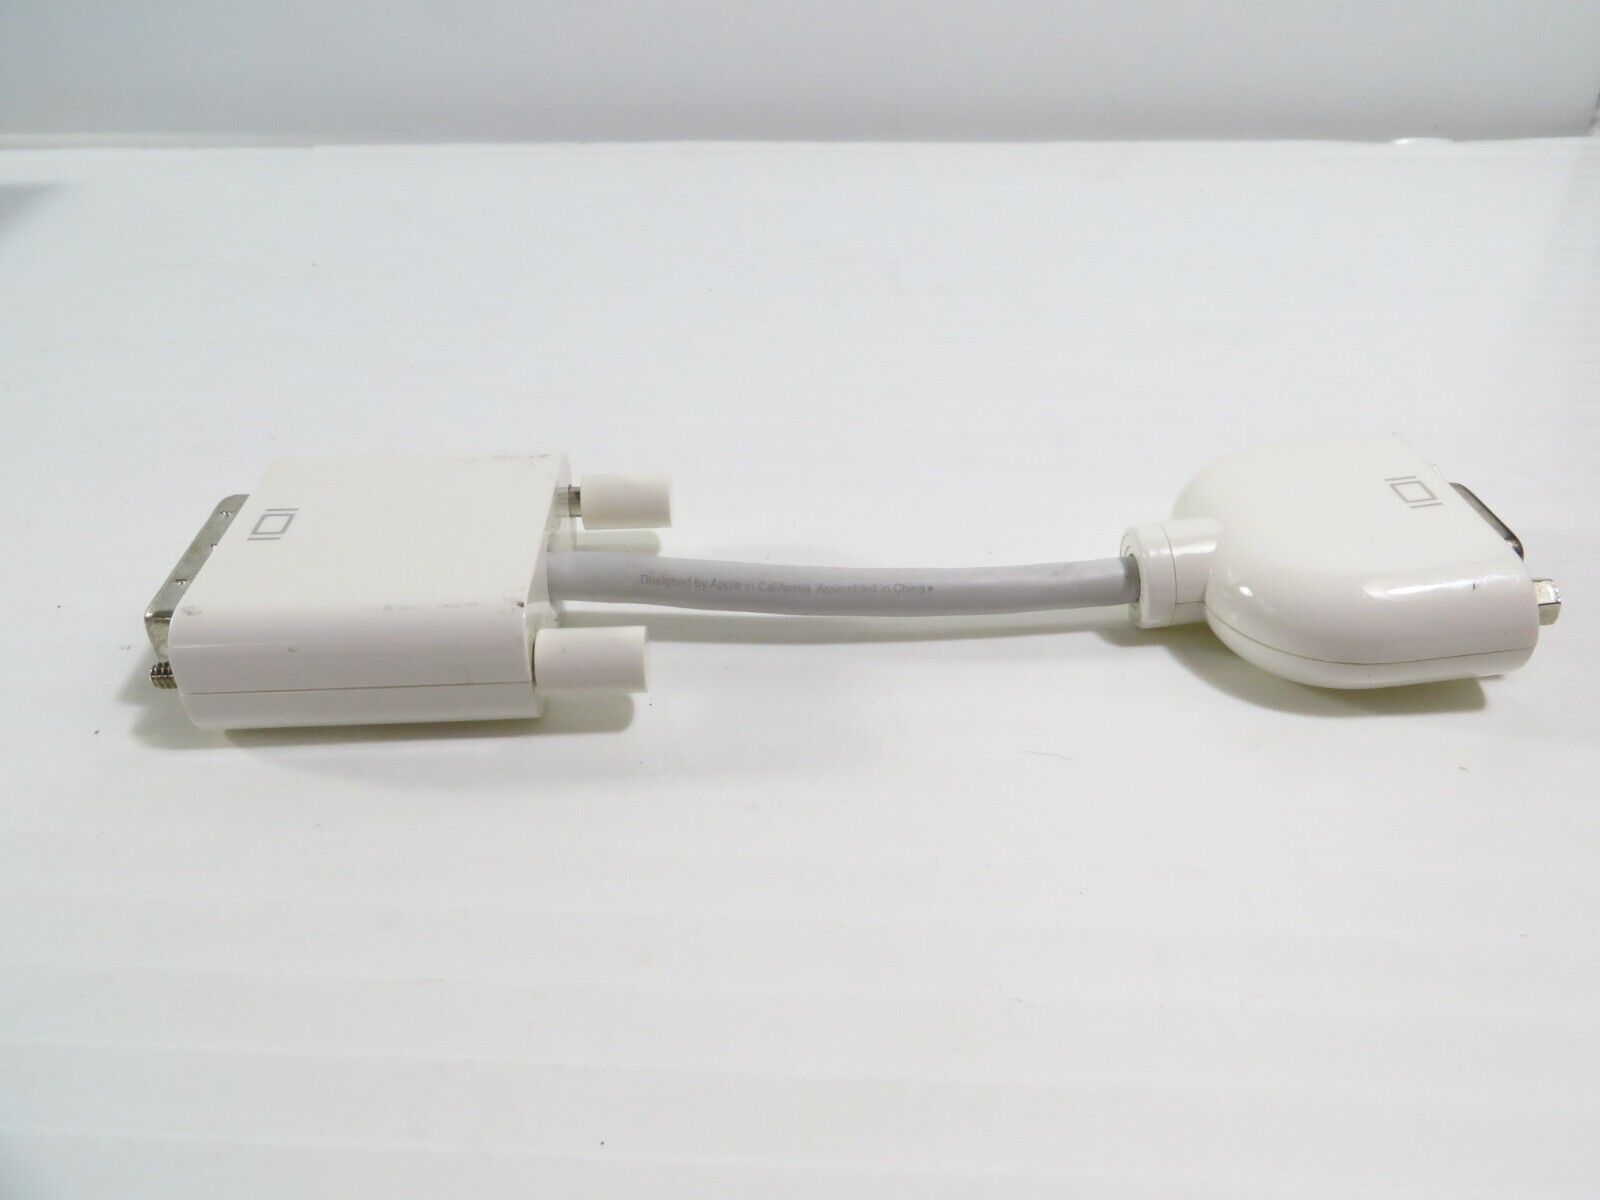 Genuine Apple DVI to VGA Video Adapter DVI-I Male to VGA Female